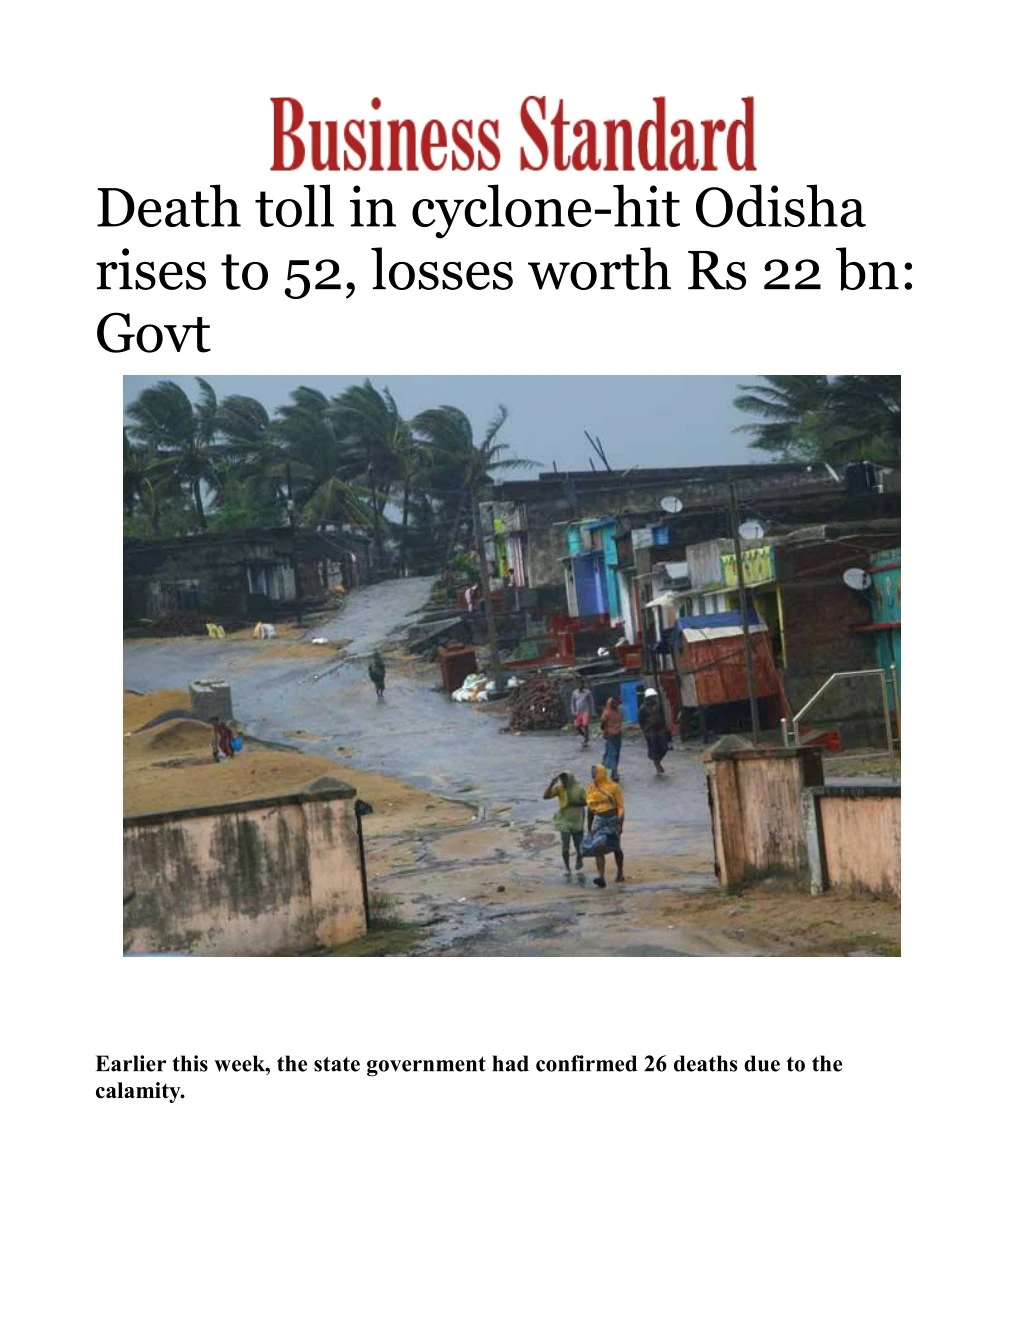 death toll in cyclone hit odisha rises